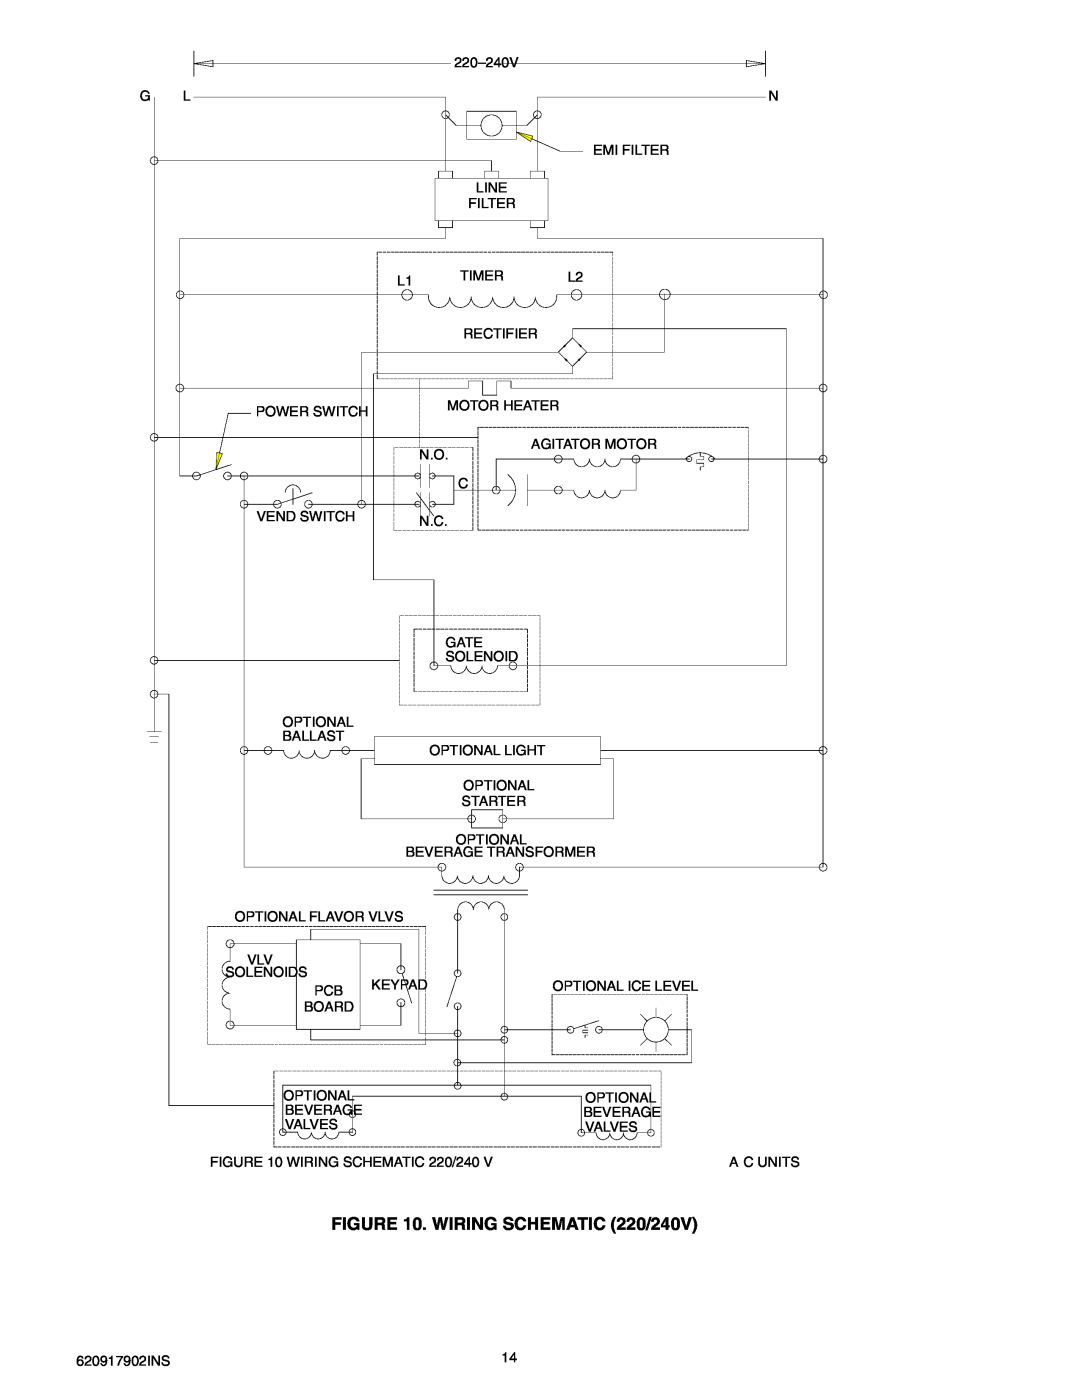 Cornelius ENDURO-175 installation manual WIRING SCHEMATIC 220/240V 